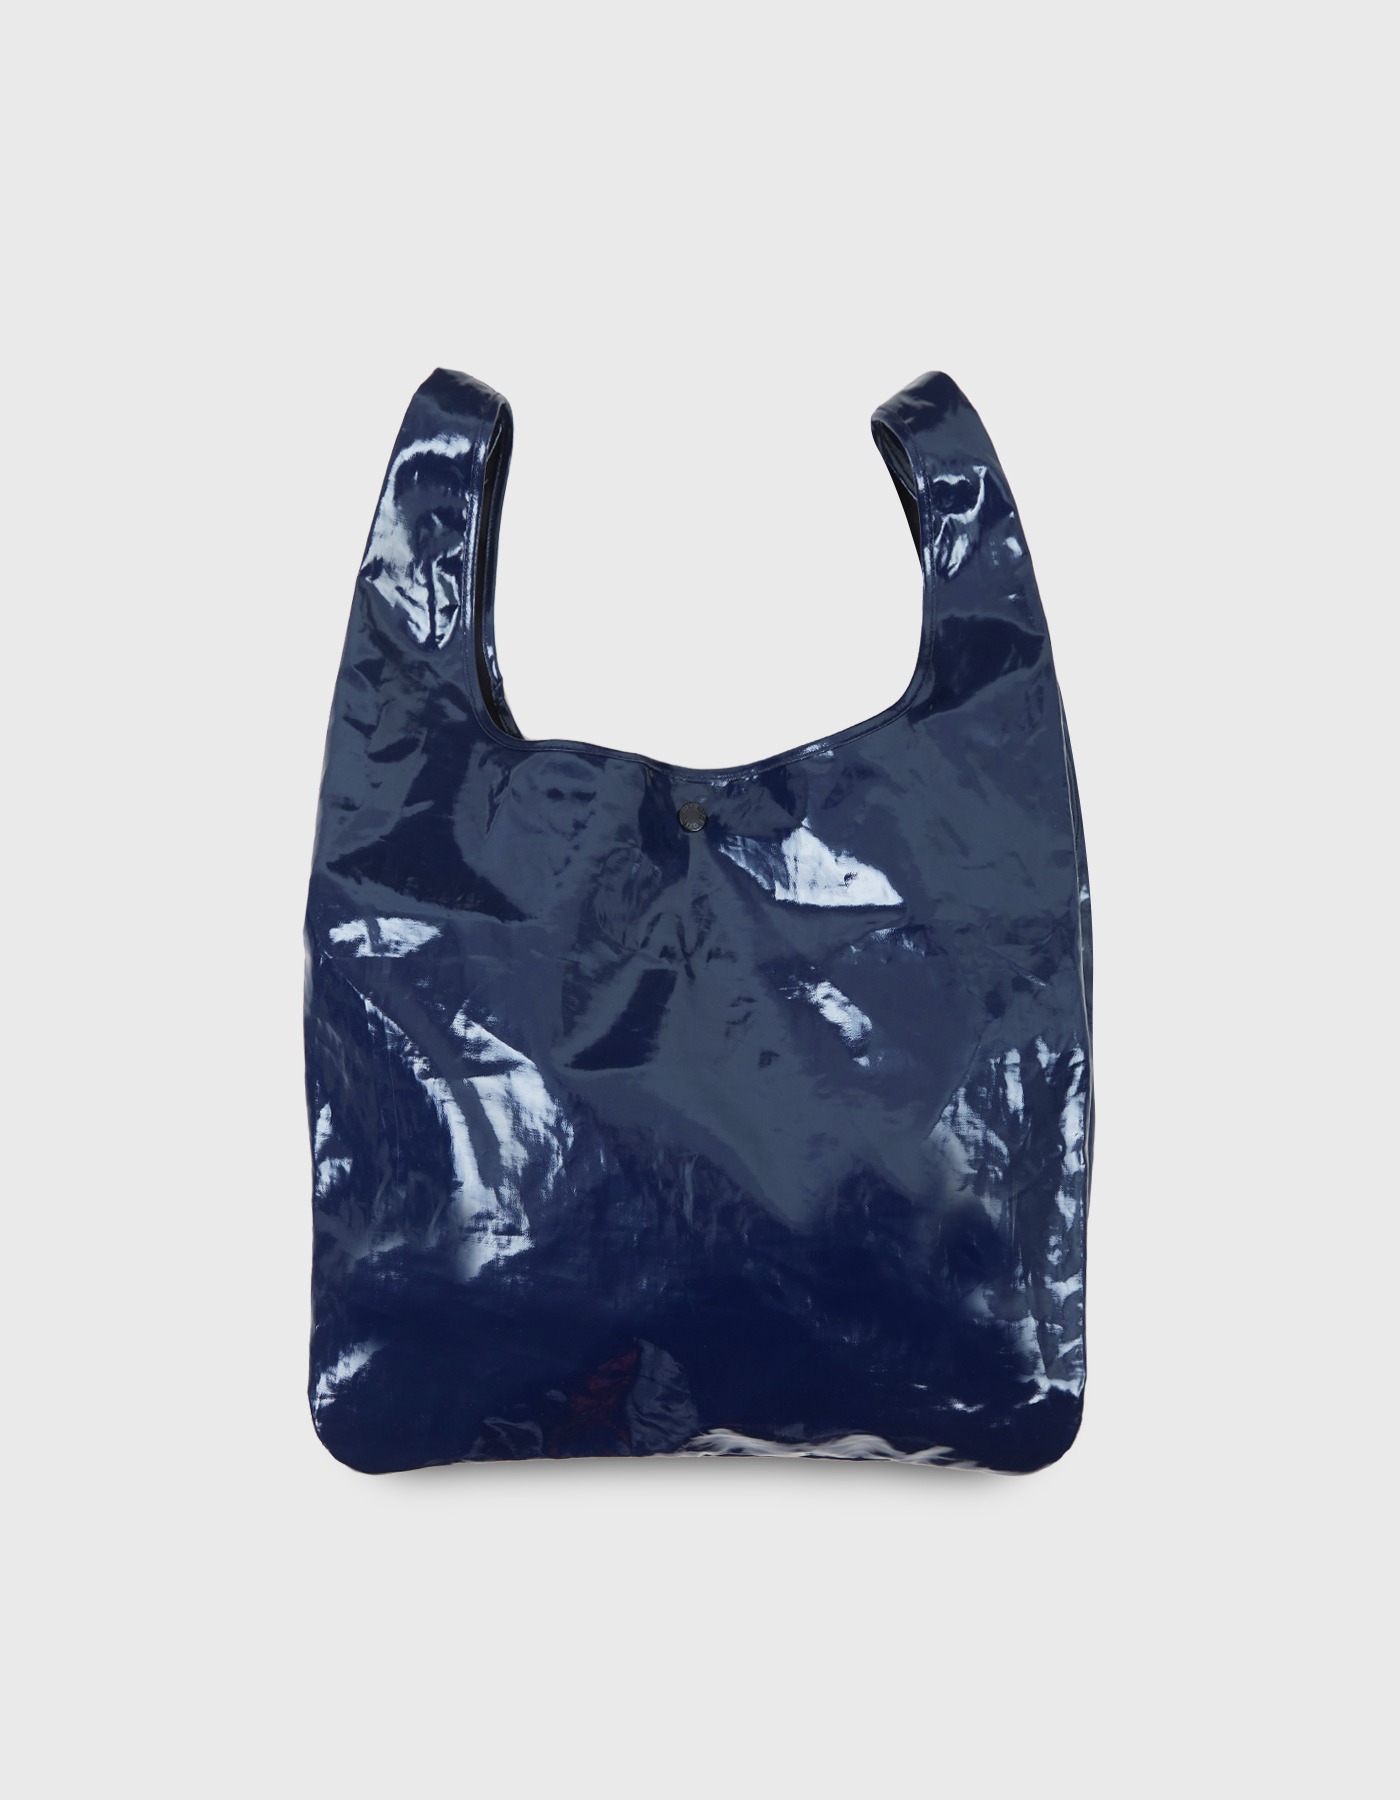 PATENT PLASTIC BAG / Navy